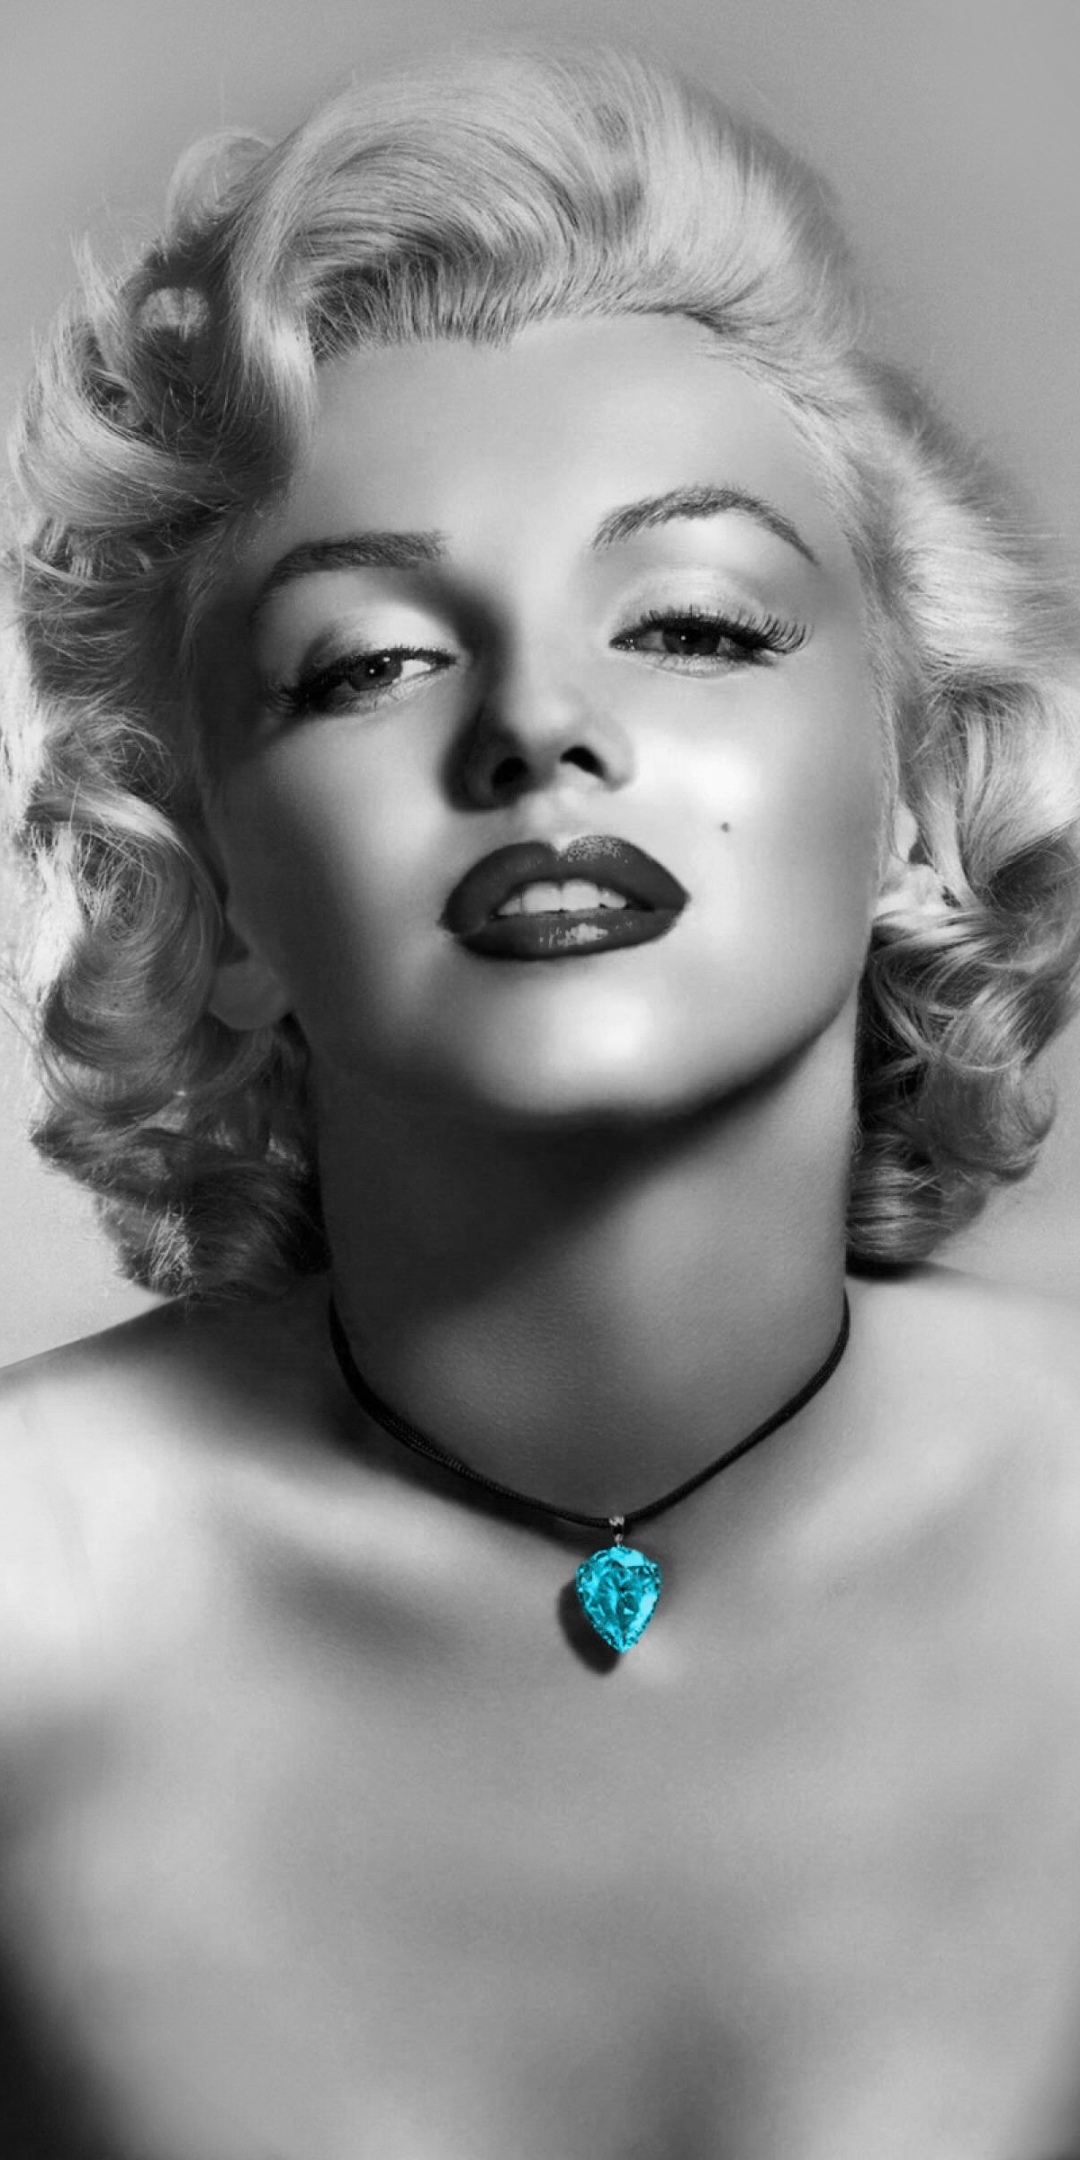 Mobile HD Wallpaper Marilyn Monroe 